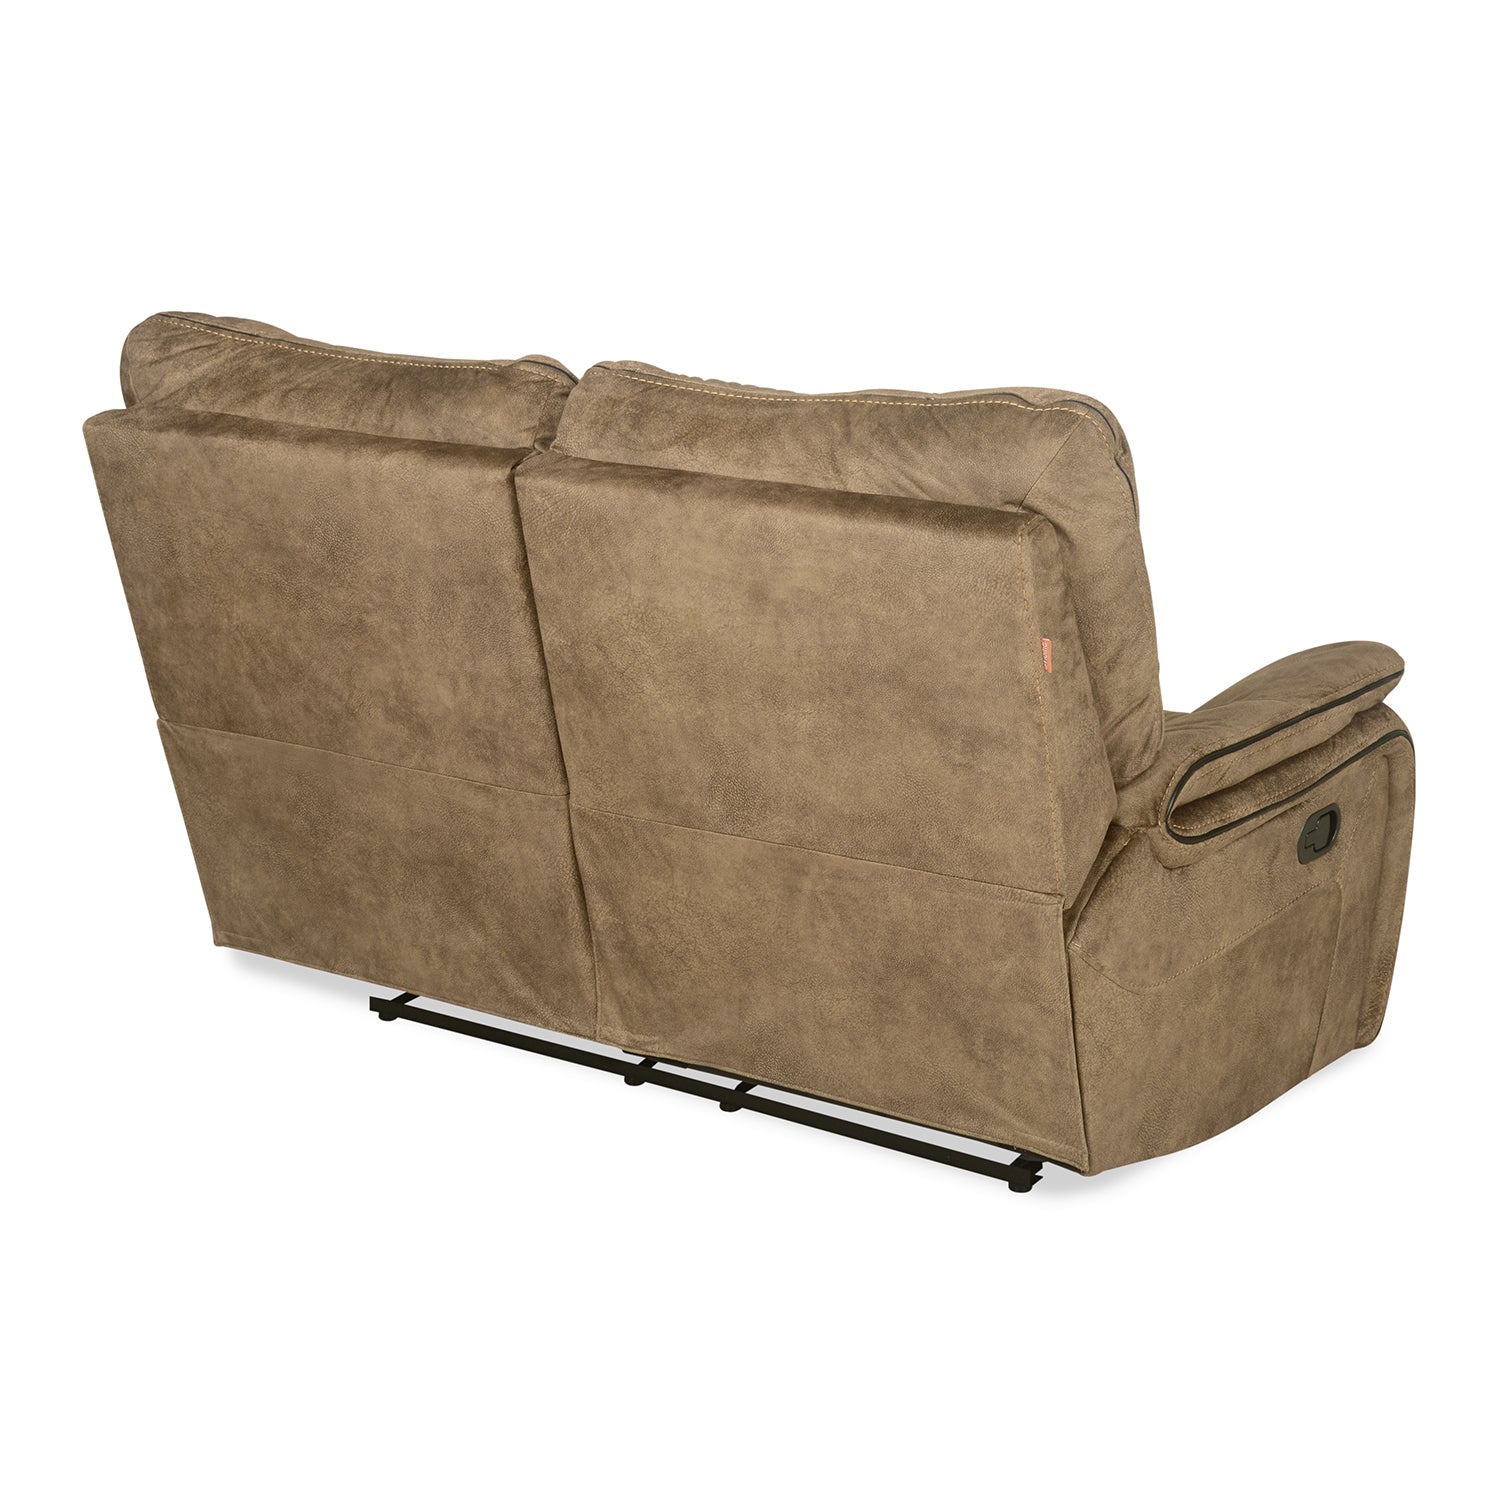 Iris 2 Seater Sofa with Manual Recliner (Tuscan Brown)